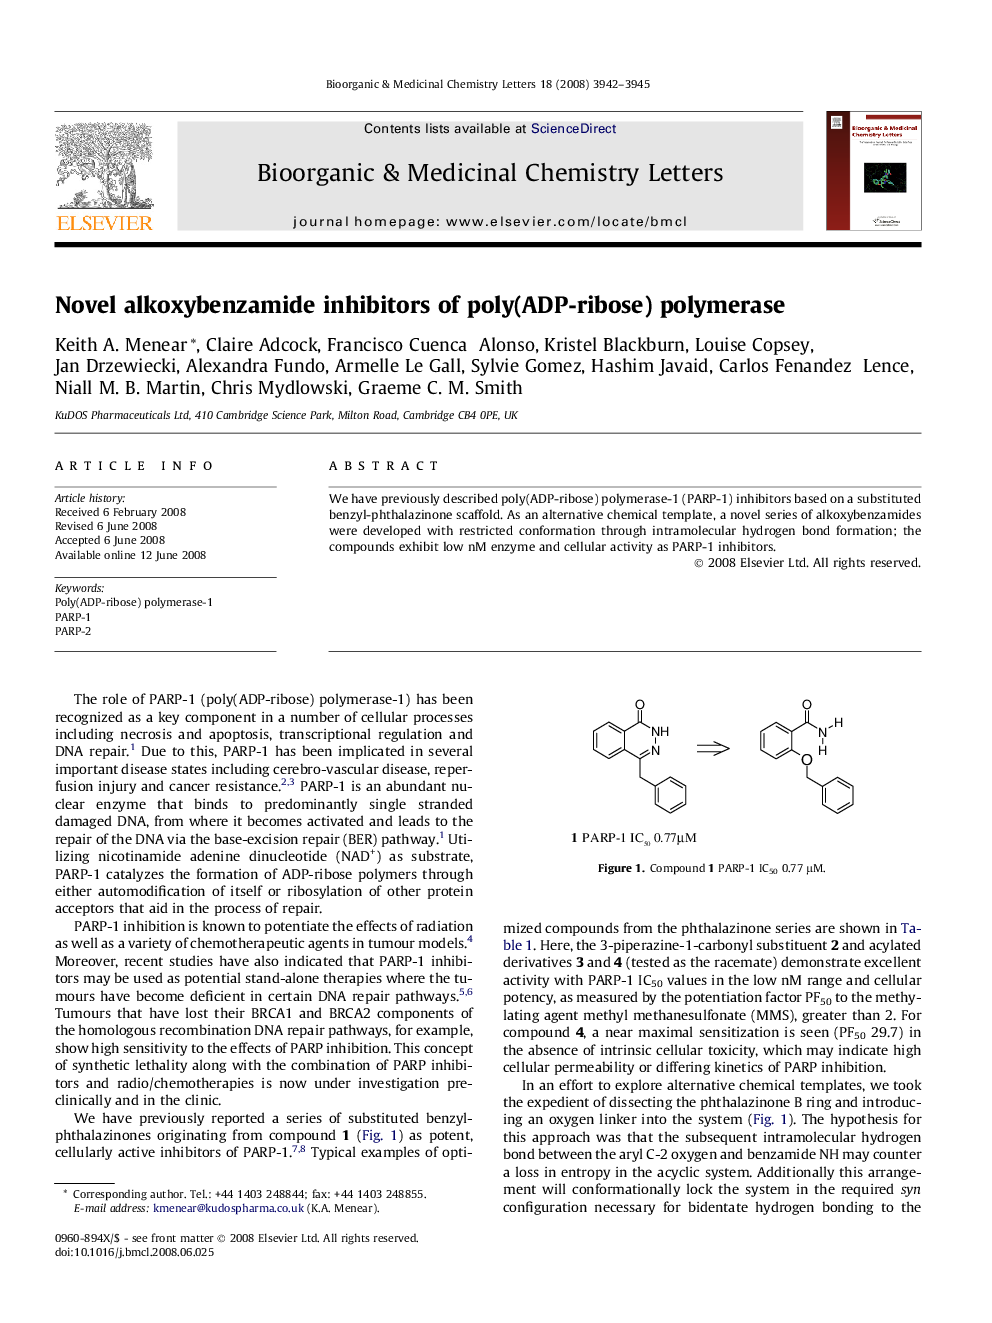 Novel alkoxybenzamide inhibitors of poly(ADP-ribose) polymerase